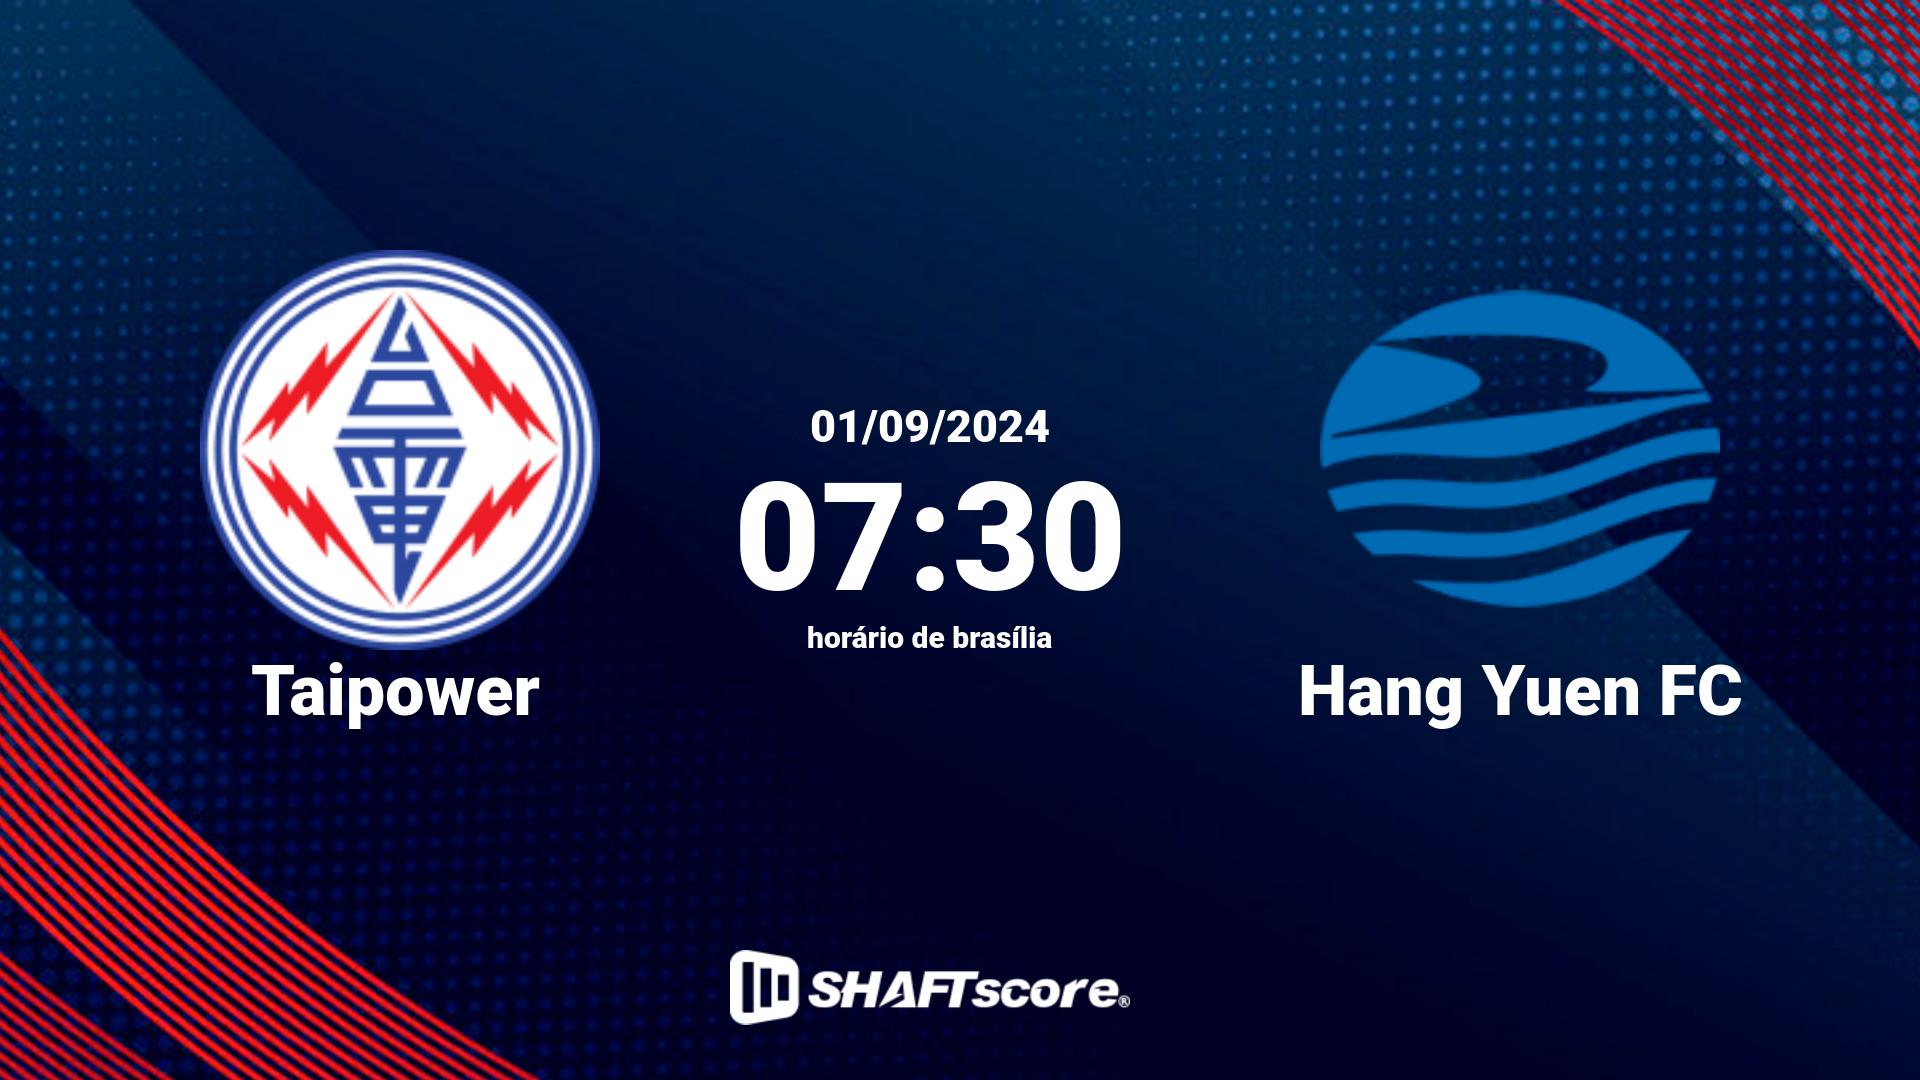 Estatísticas do jogo Taipower vs Hang Yuen FC 01.09 07:30